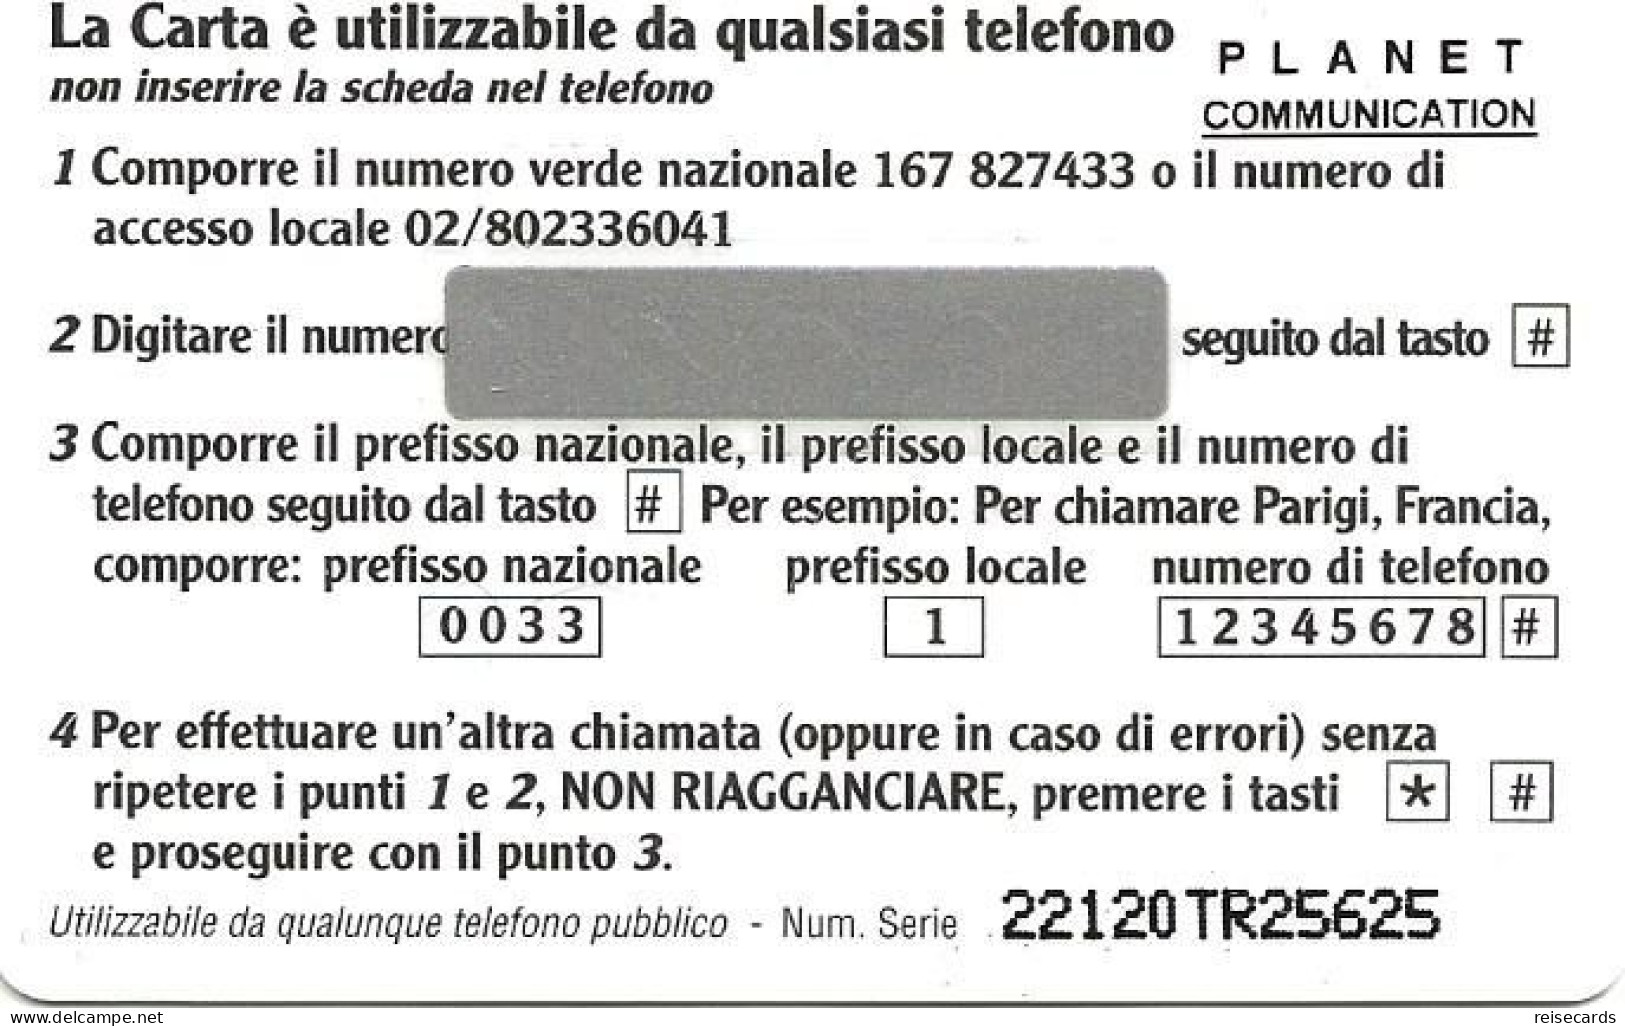 Italy: Prepaid Planet Communication - Shell. Ferrari. Mint - [2] Tarjetas Móviles, Prepagadas & Recargos